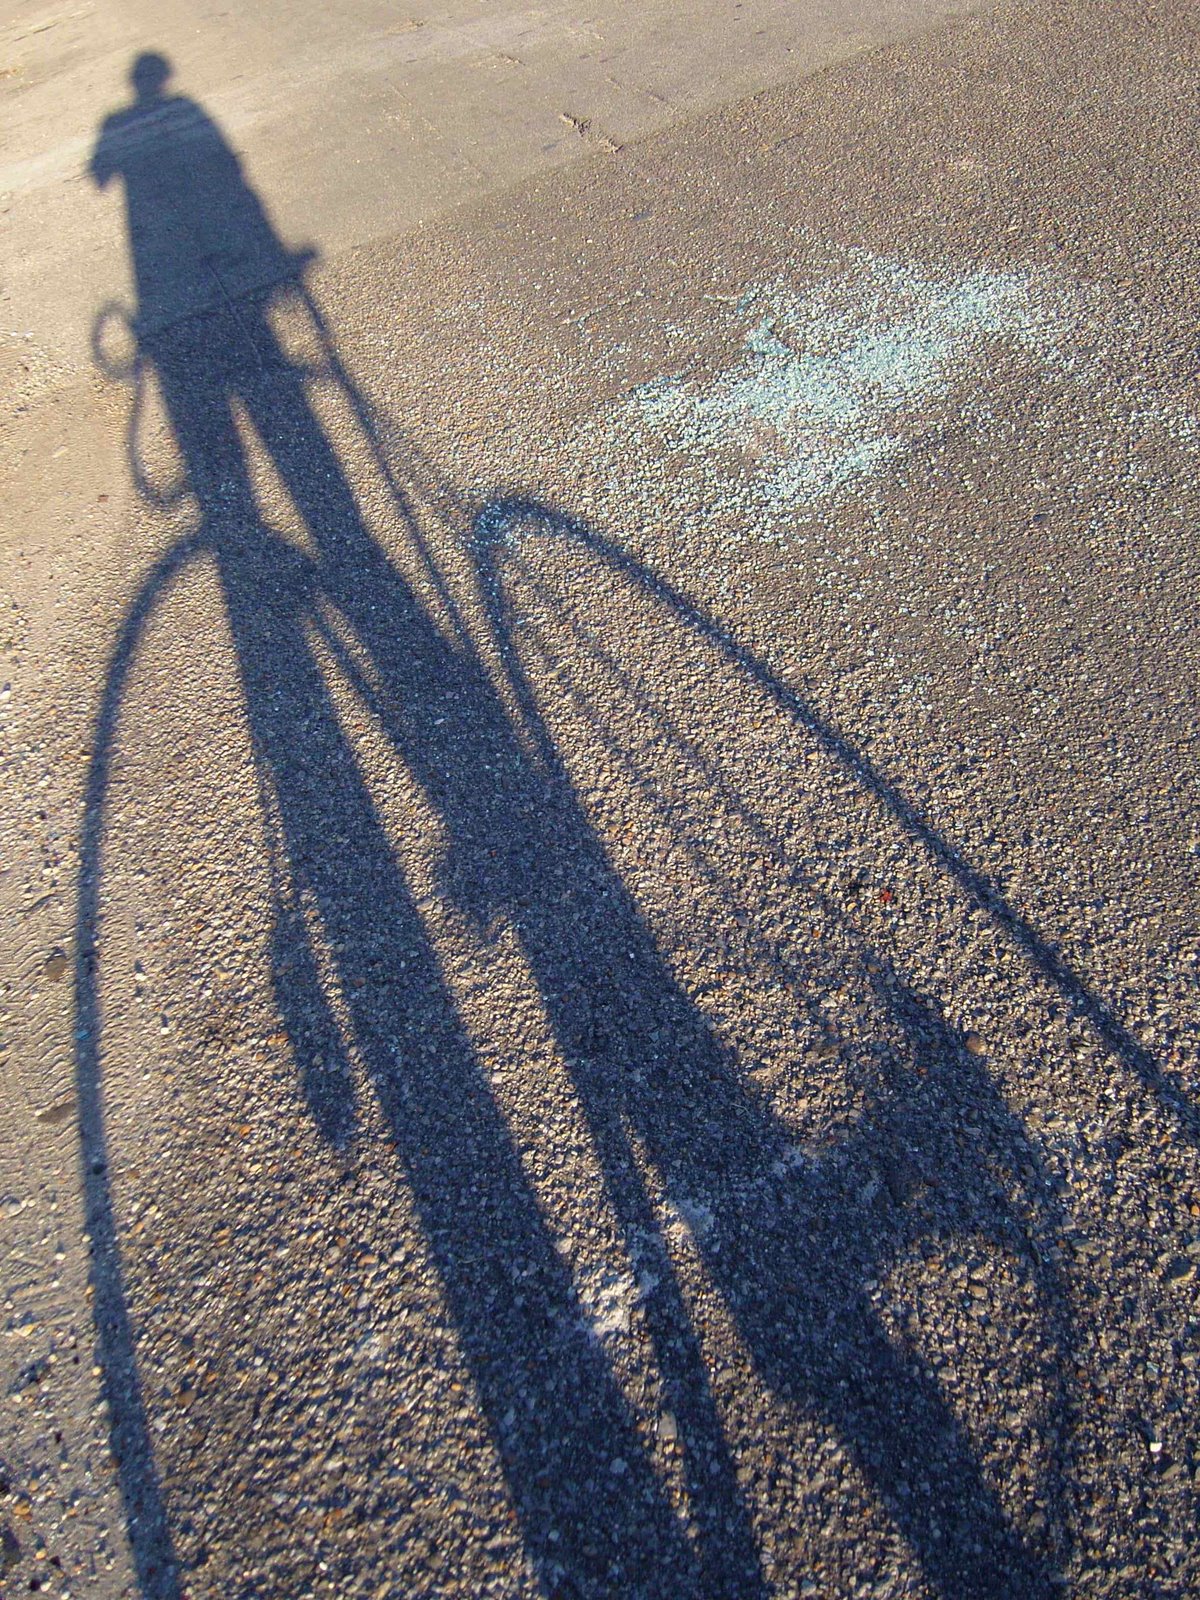 [moi_bike_shadow_blog.jpg]